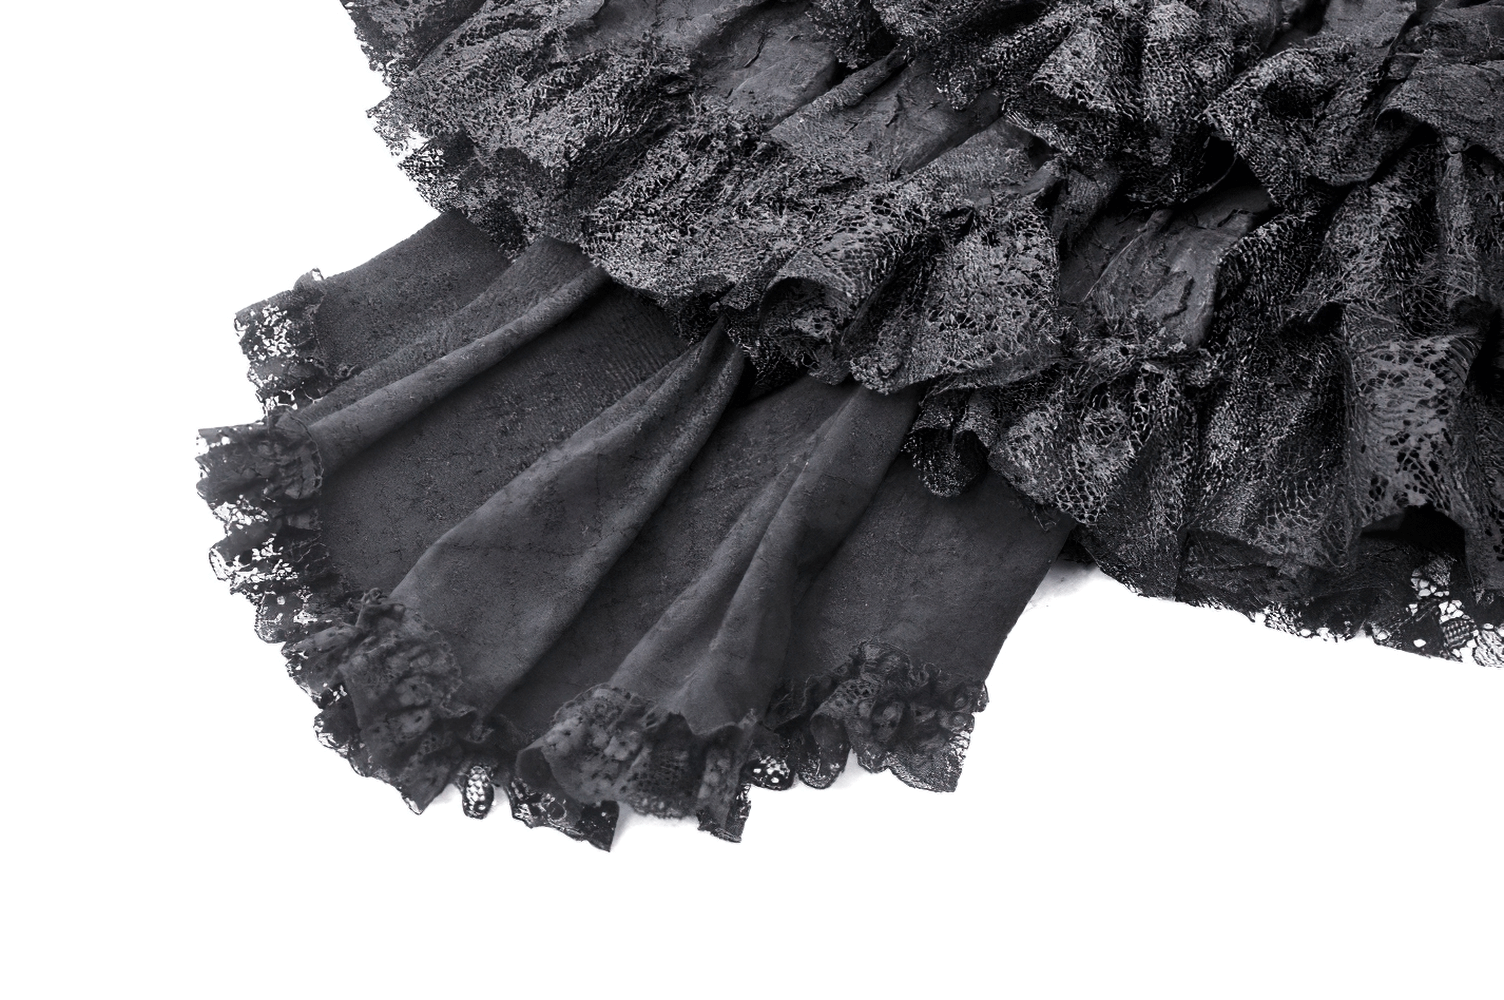 Black Tiered Ruffle Skirt with Elastic Waistband